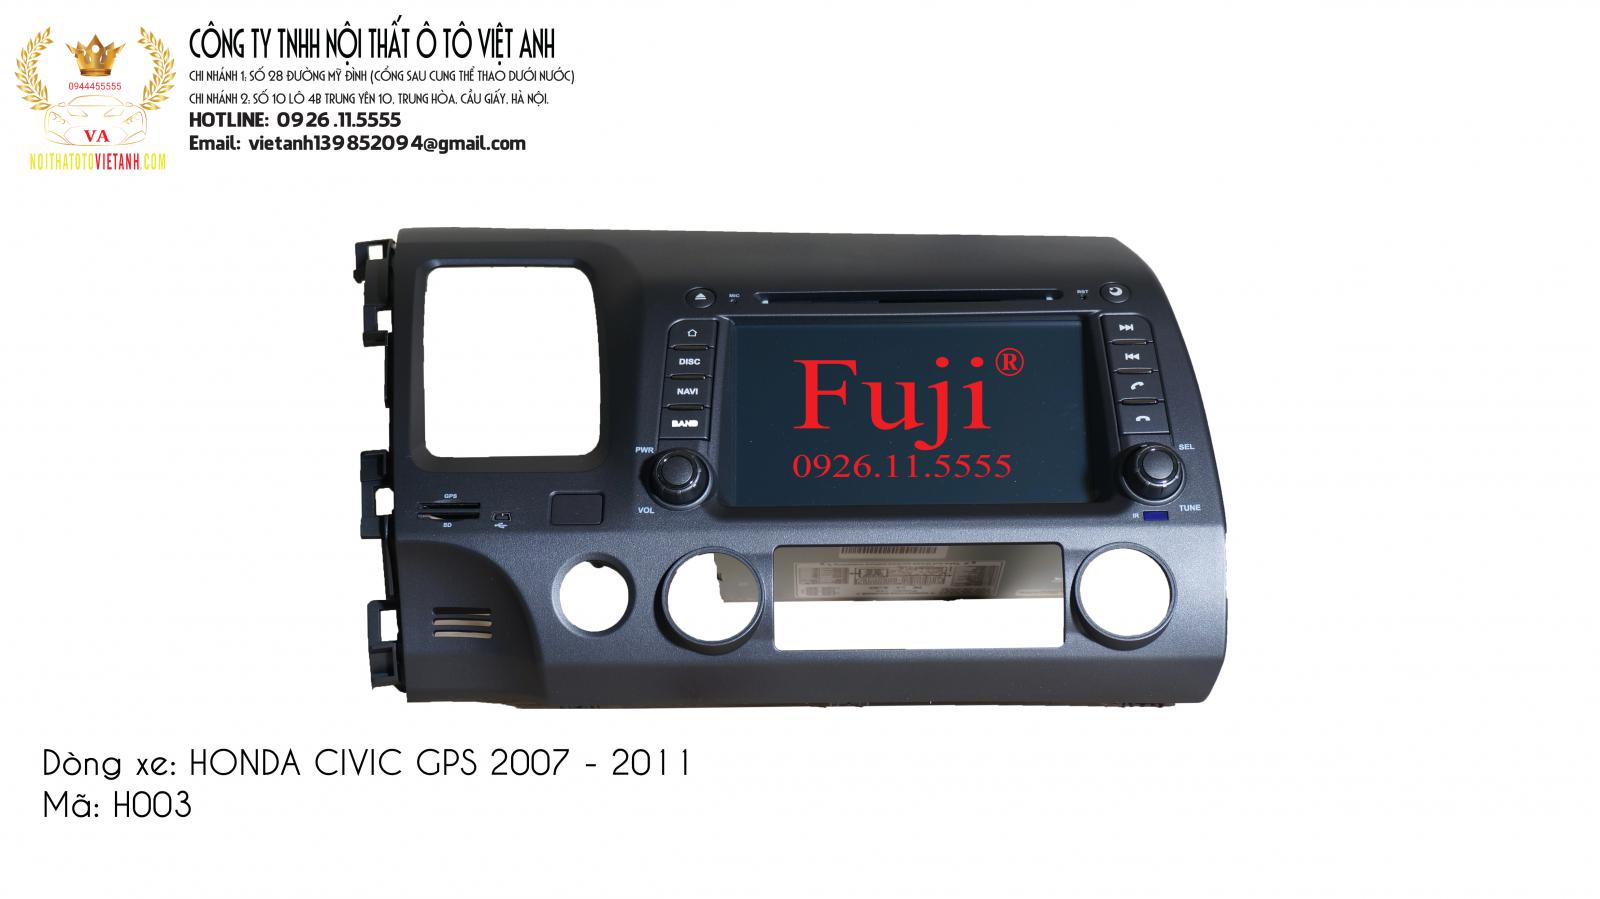 DVD FUJI THEO XE HONDA CIVIC GPS 2007 - 2010